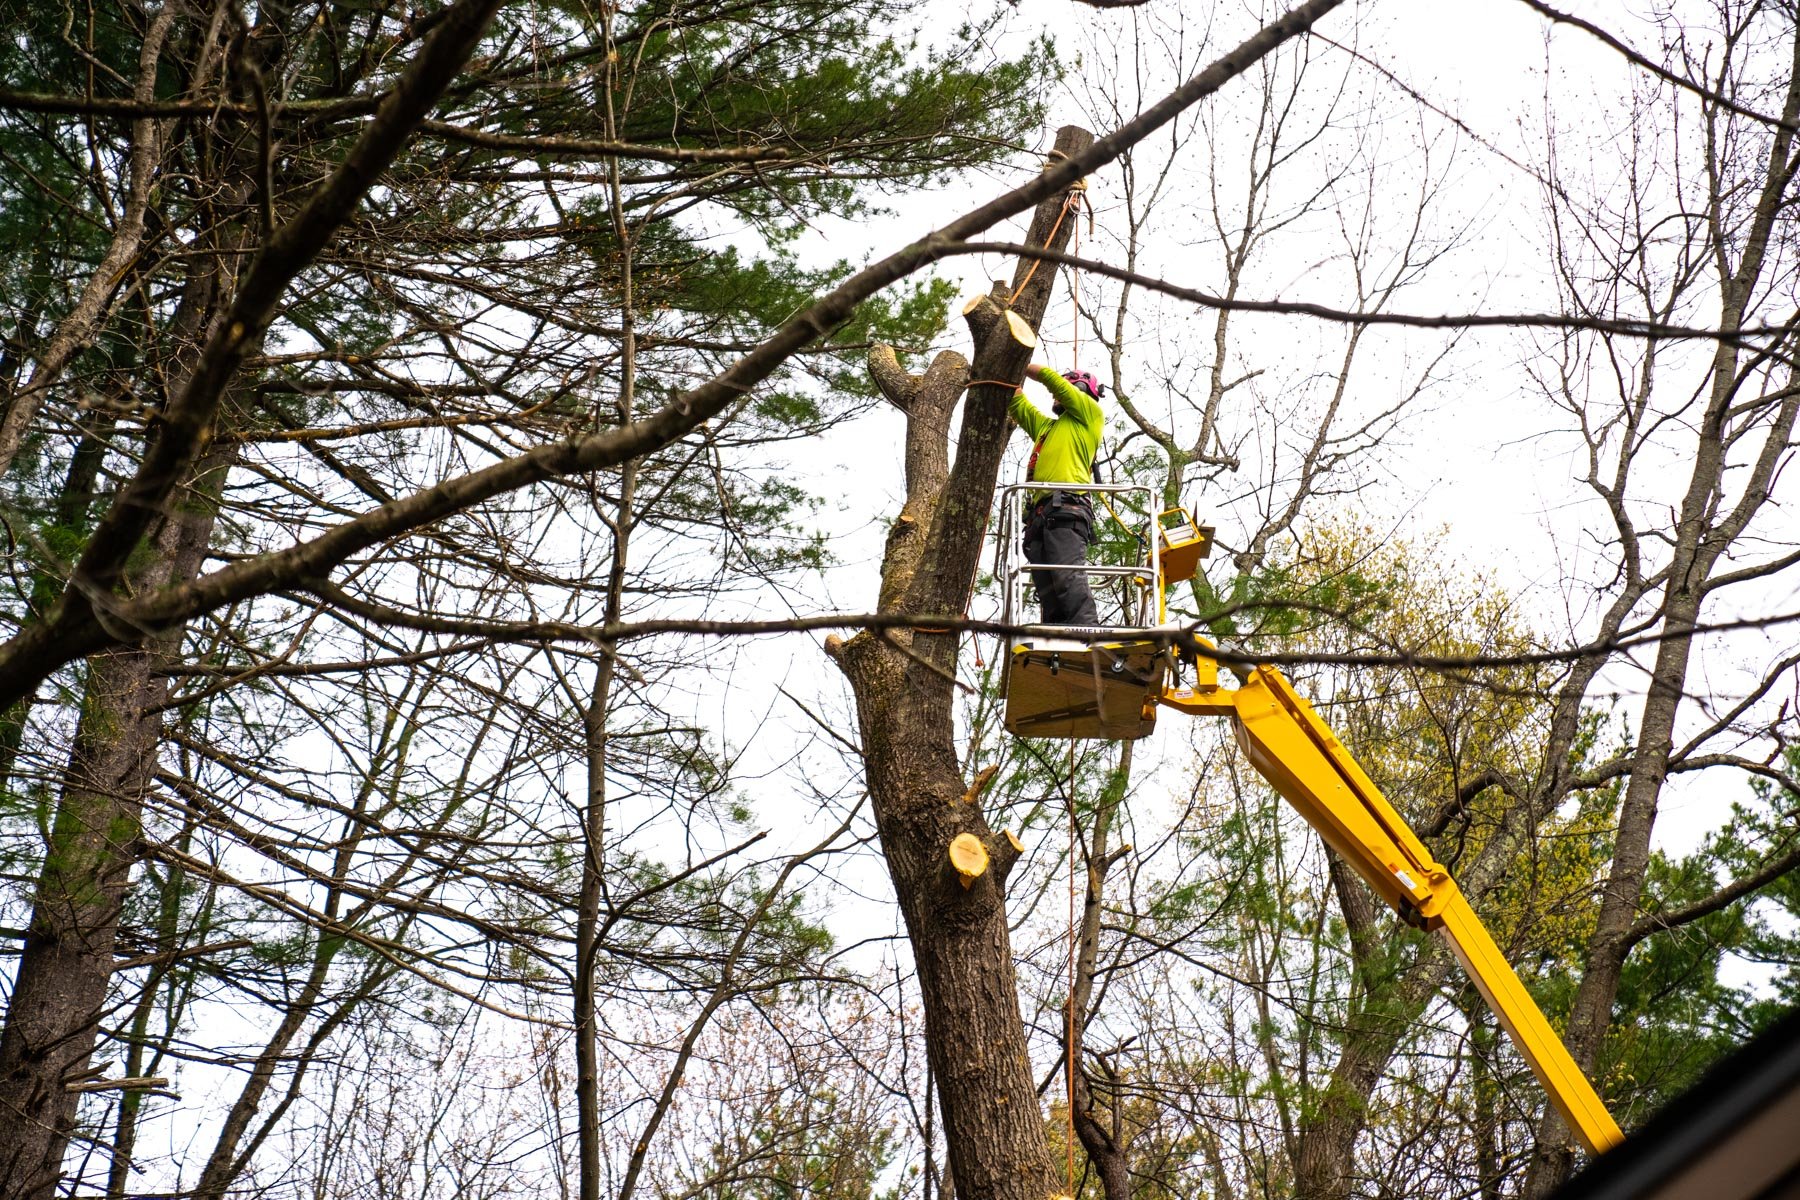 tree care expert ties rope to remove tree